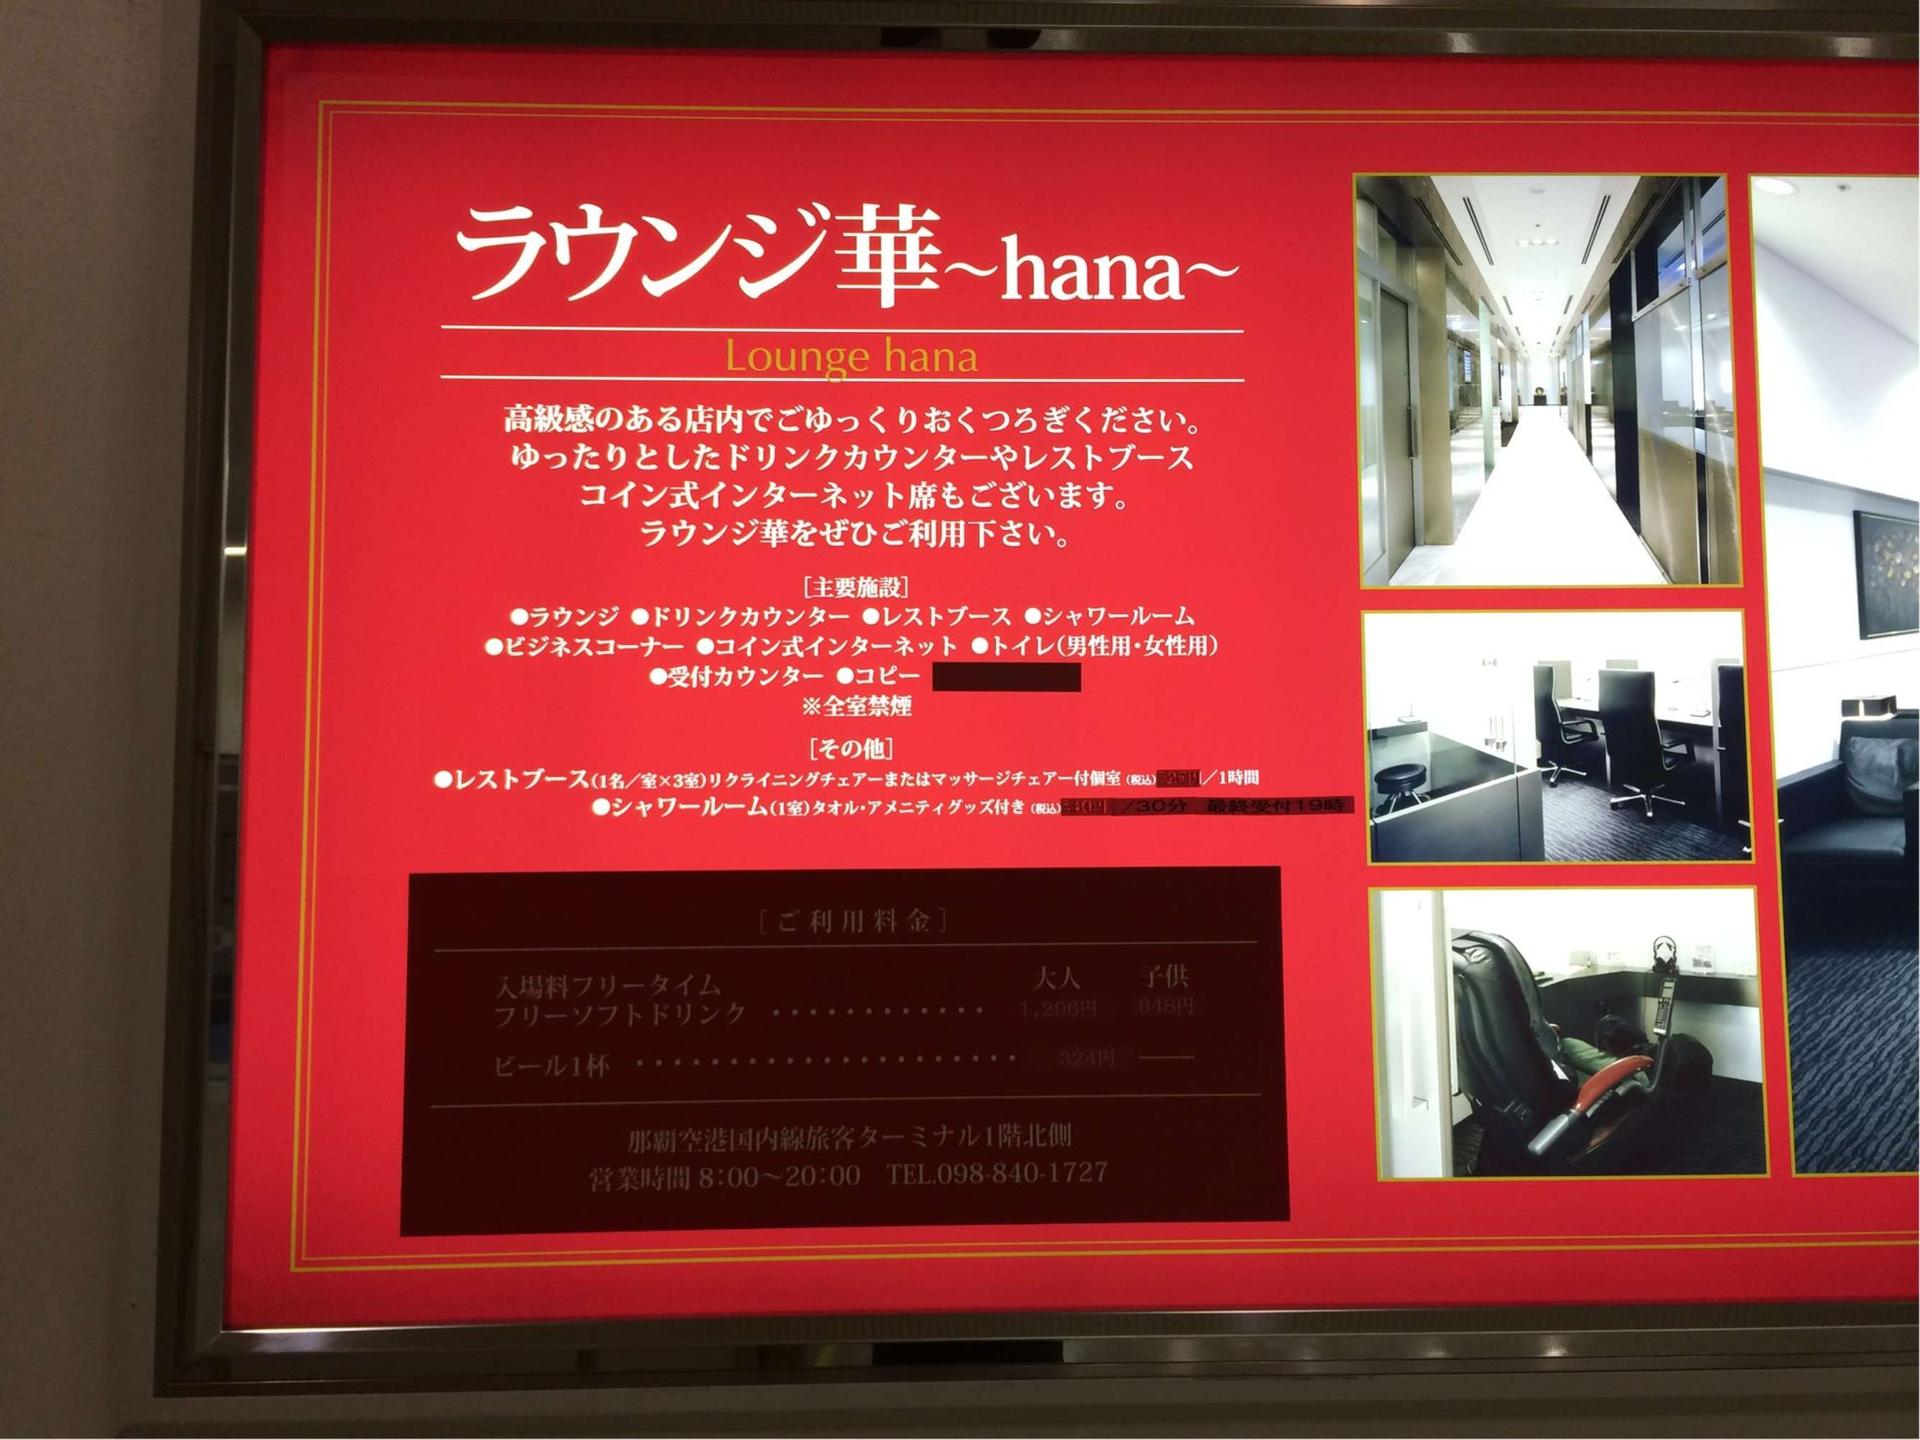 Lounge Hana image 2 of 5